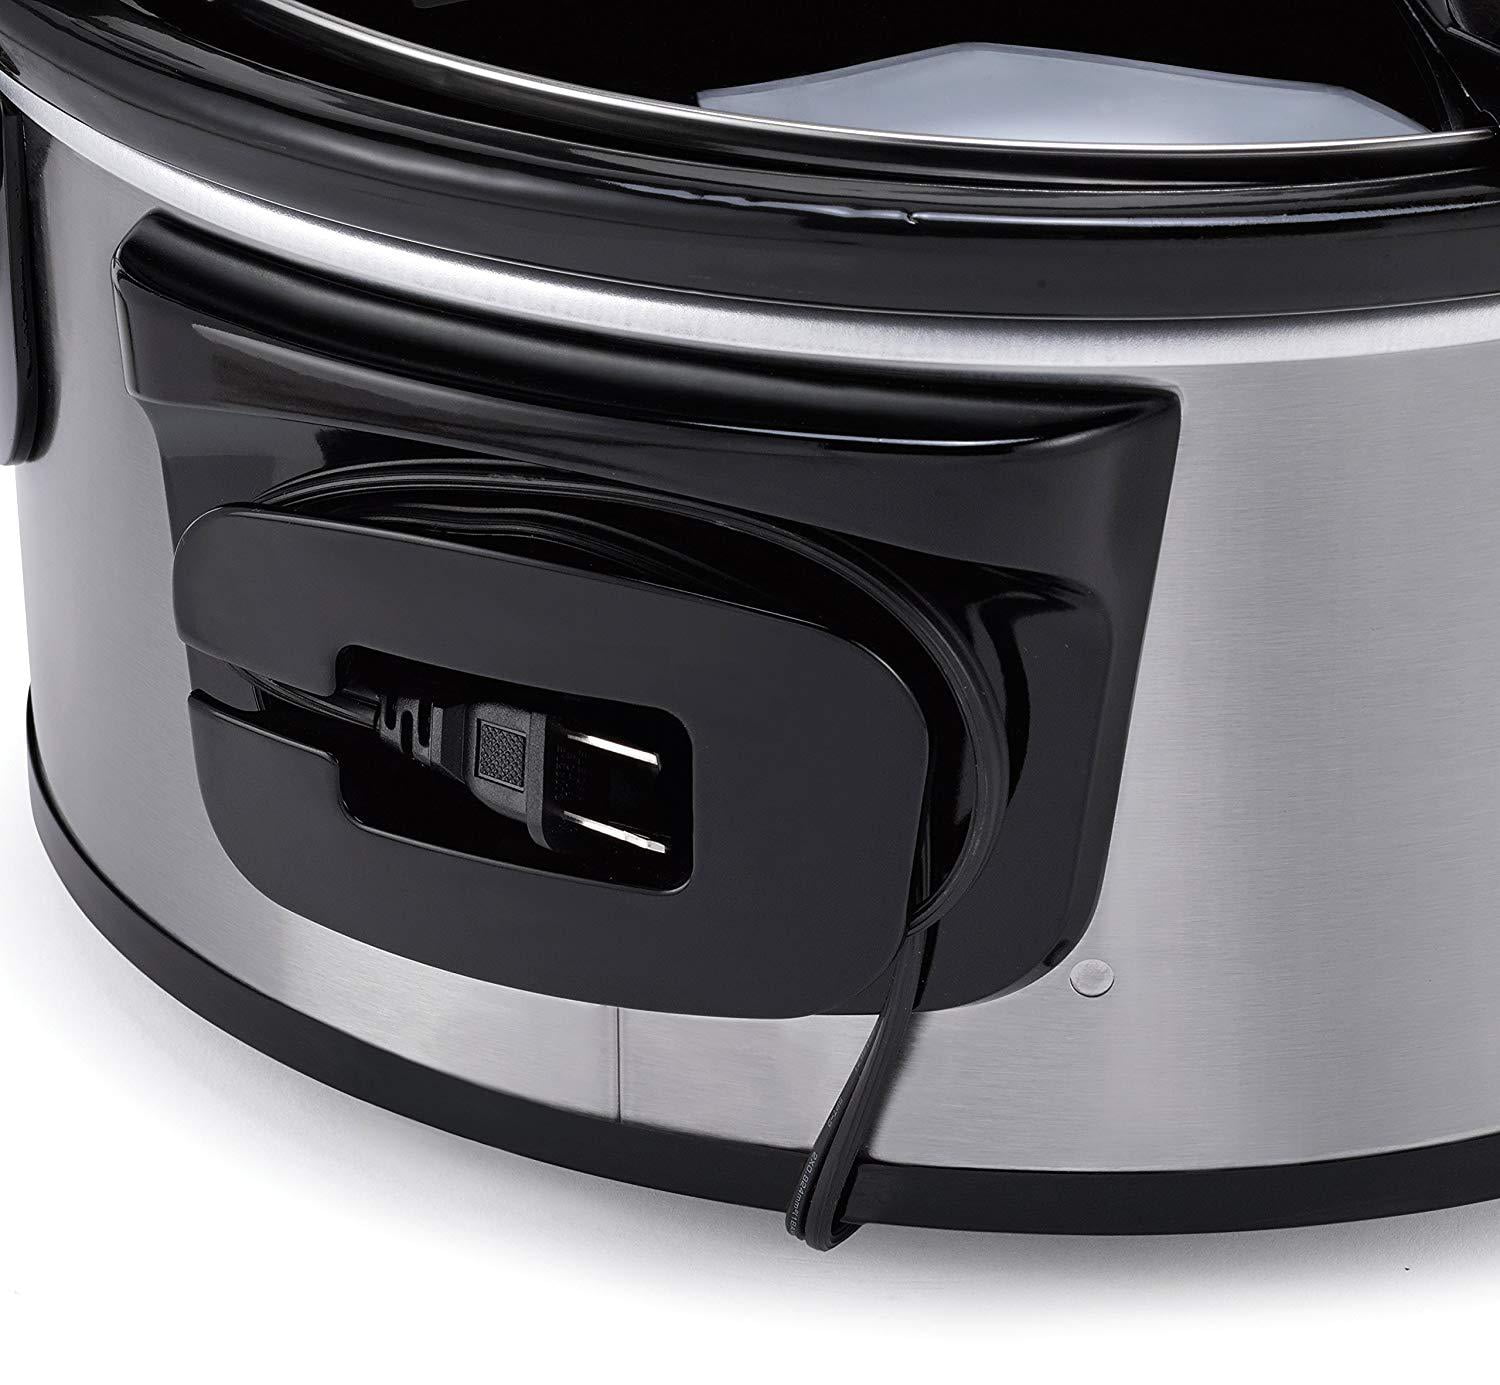  Crock-Pot 6-Quart Cook & Carry Oval Manual Portable Slow Cooker,  Red - SCCPVL600-R: Crockpot: Home & Kitchen